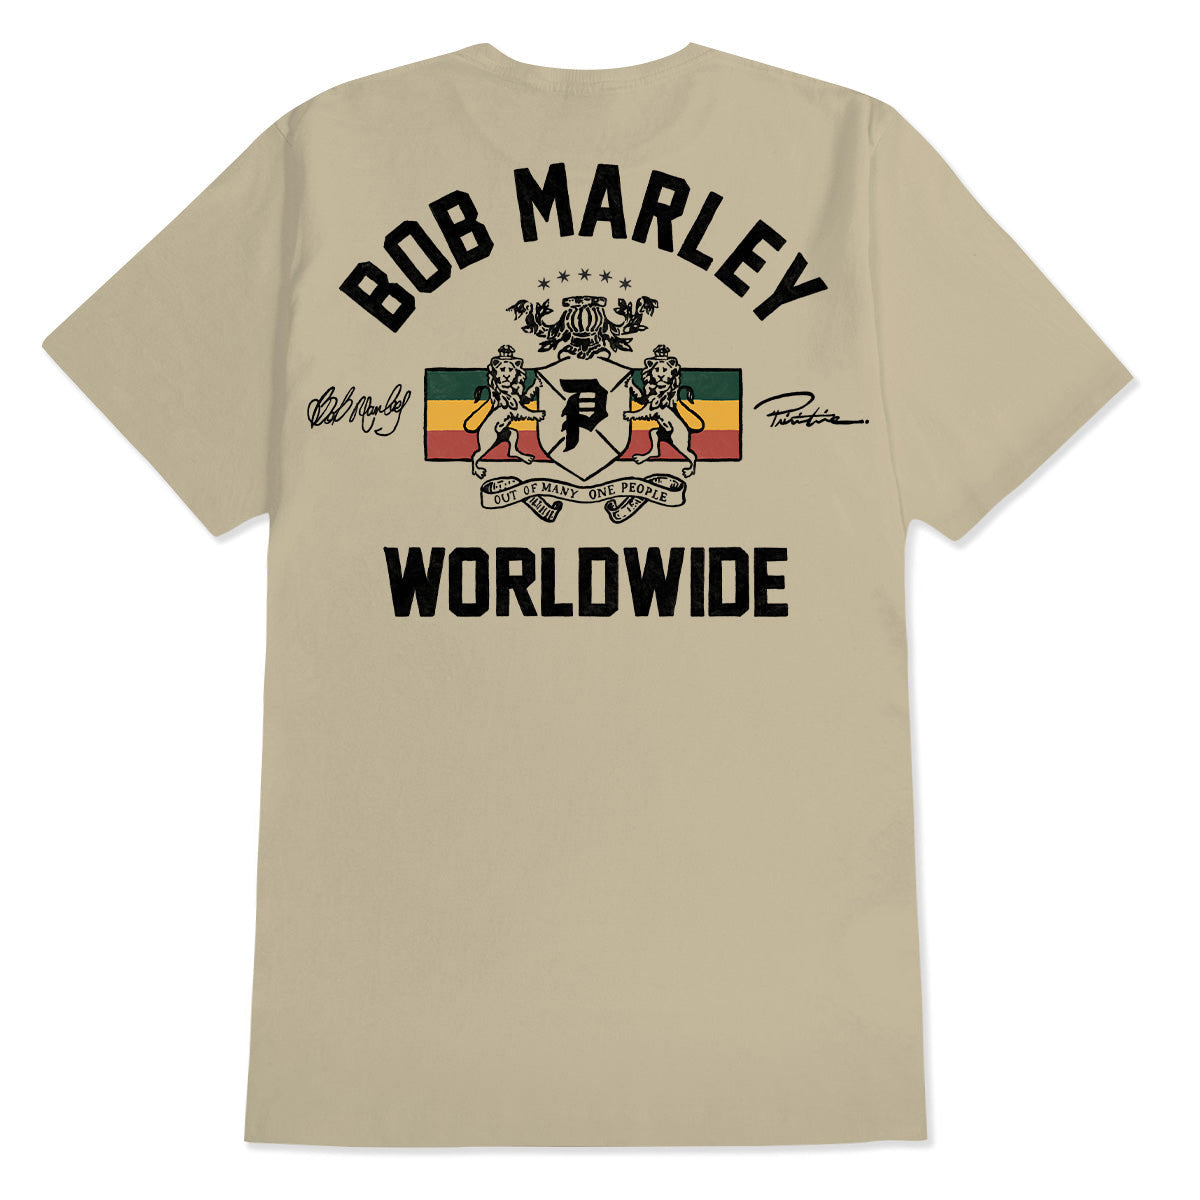 Primitive x Bob Marley Heritage T-Shirt - Sand image 1